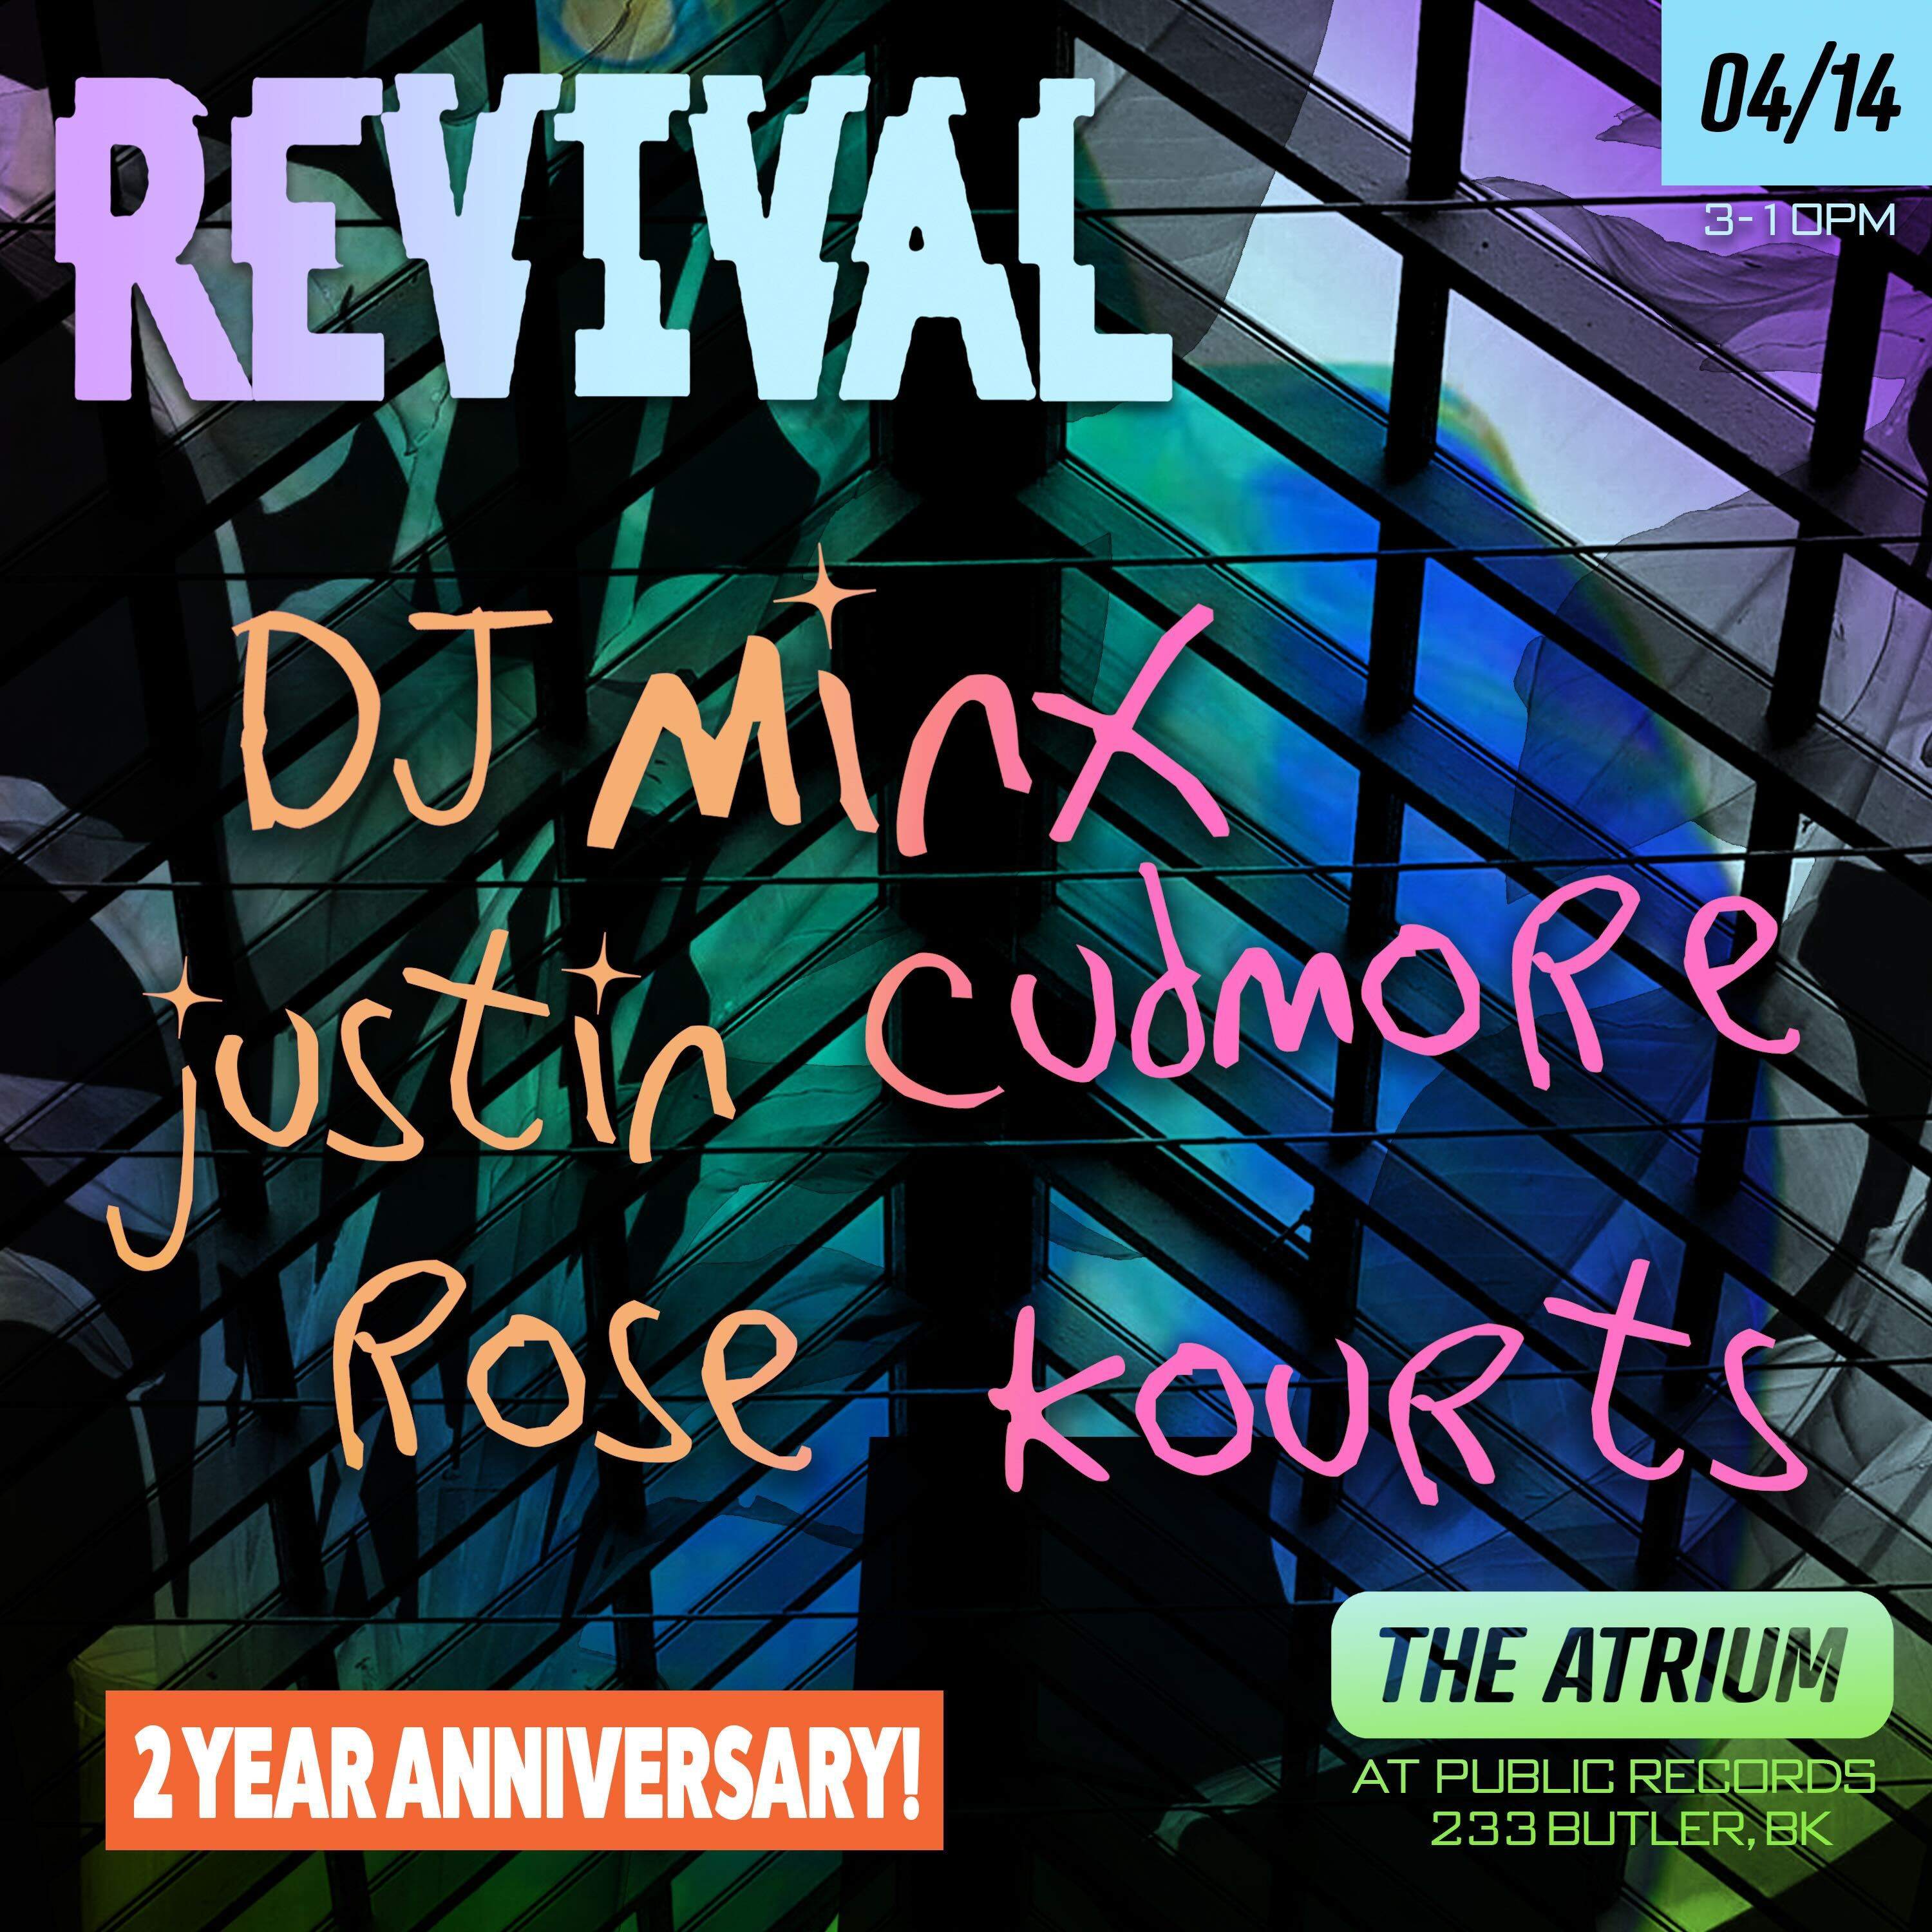 Sunday in The Atrium: REVIVAL w/ DJ Minx, Justin Cudmore + Rose Kourts - フライヤー表